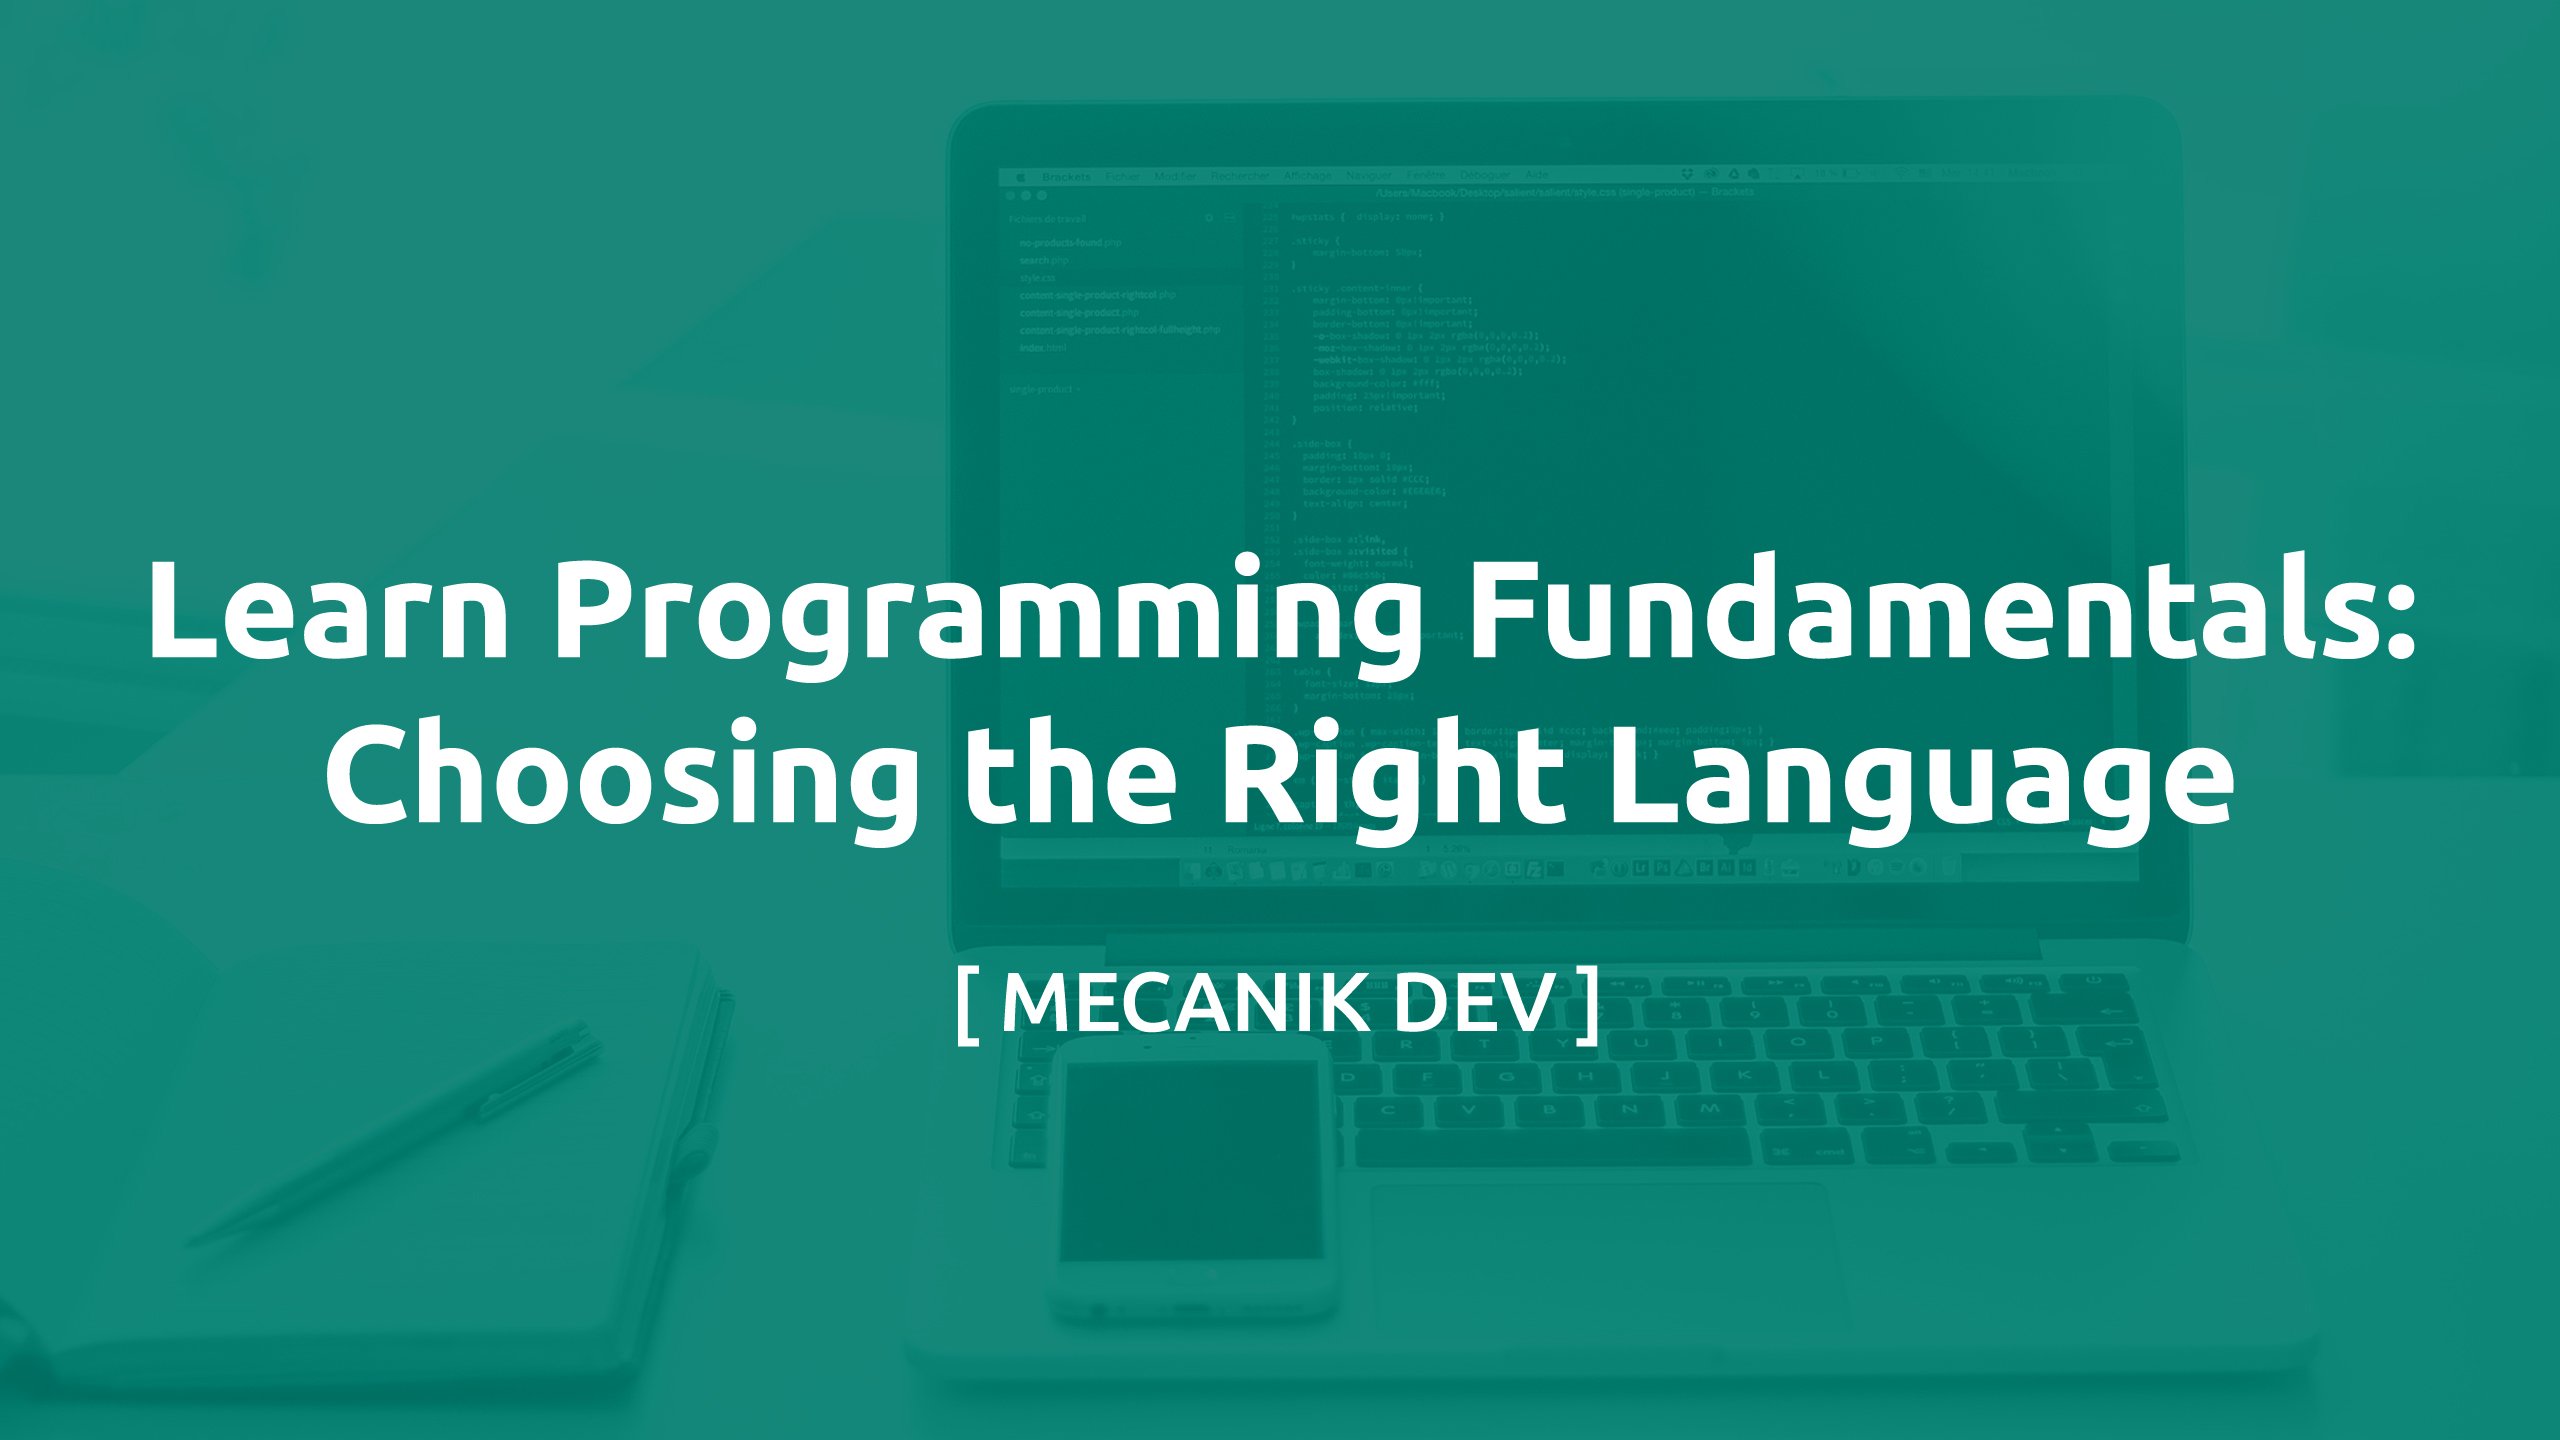 Learn Programming Fundamentals: Choosing the Right Language